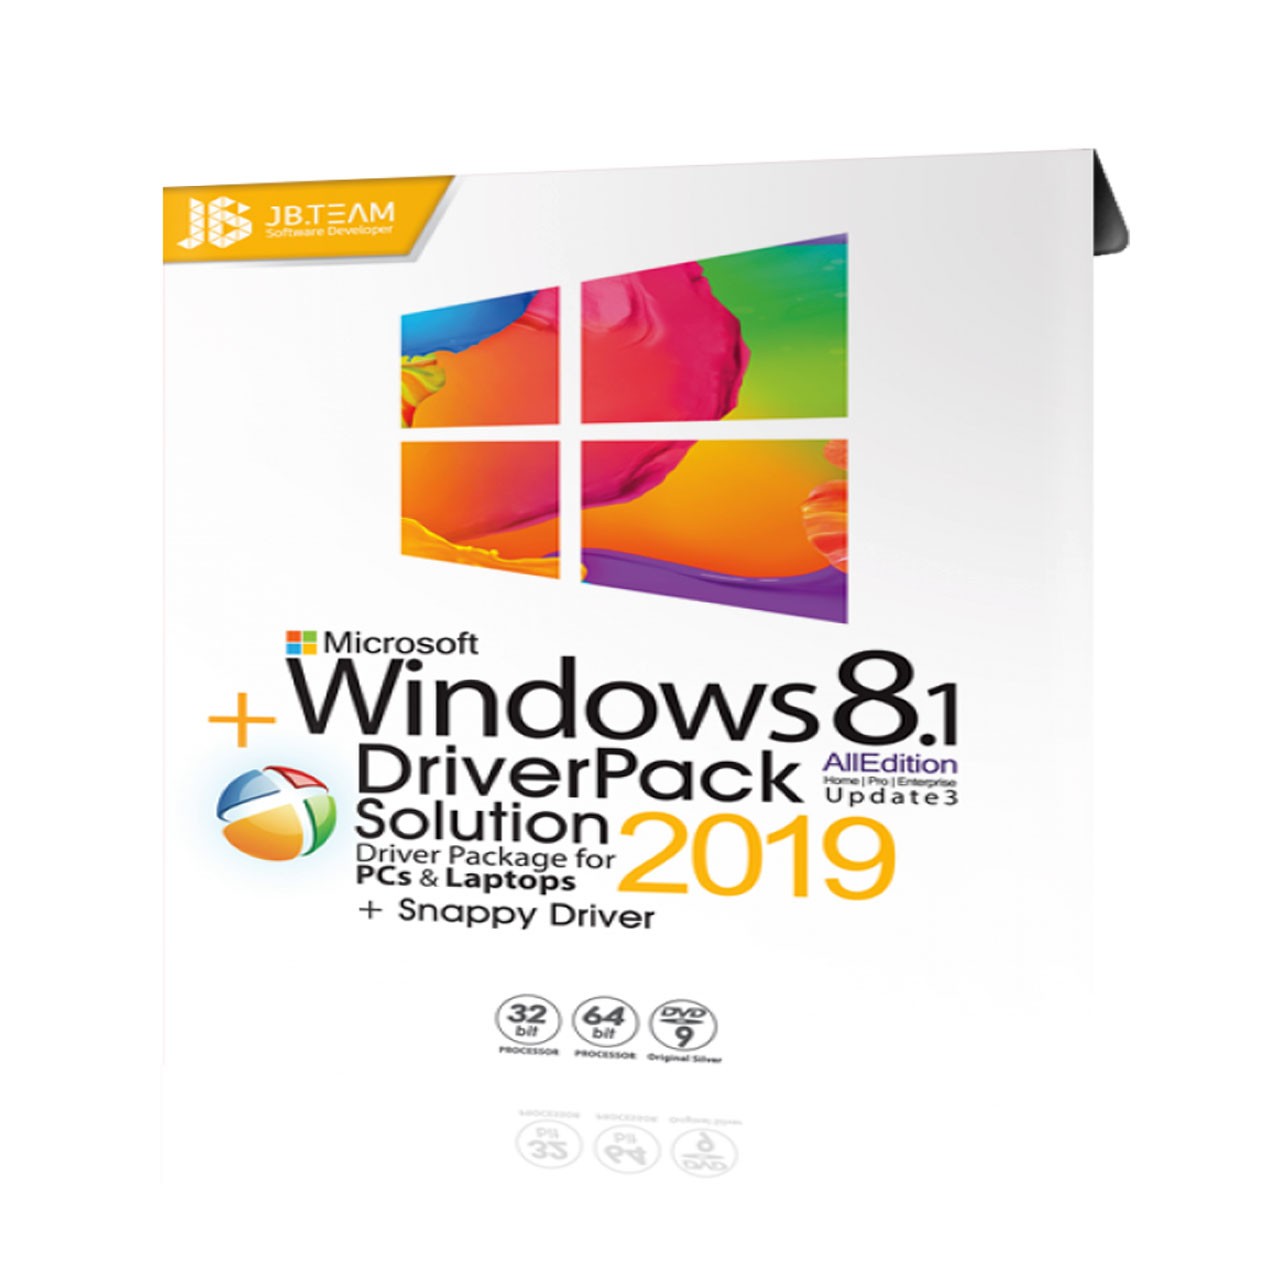 ویندوز windows 8.‎1 Update 3 DriverPack 

Windows 8.‎1 + DriverPack Solution 2019